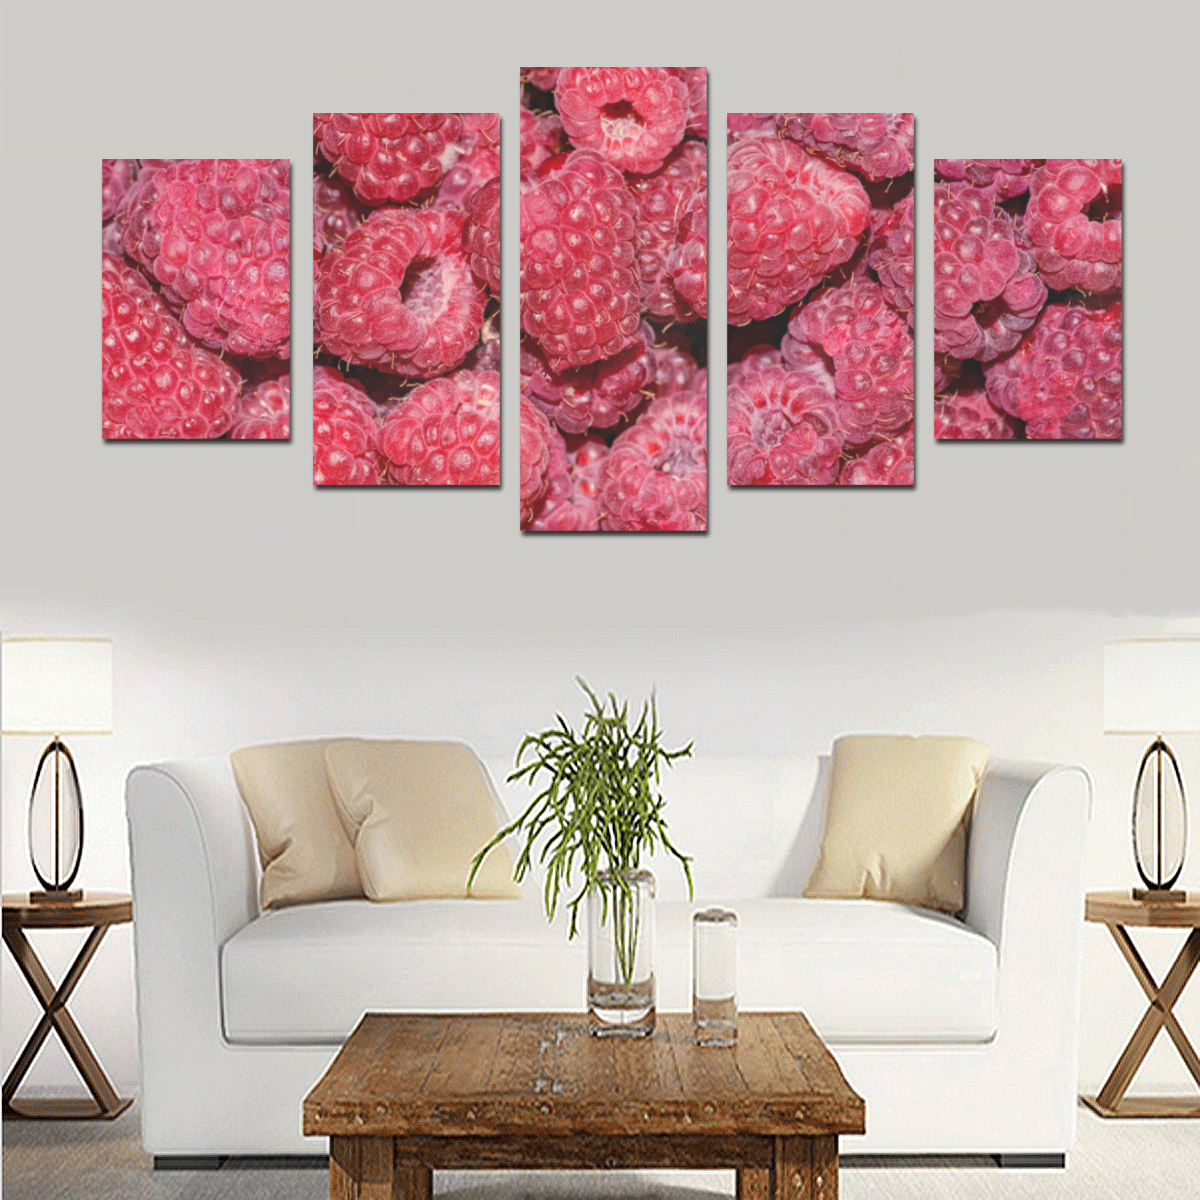 Red Fresh Raspberry Yummy Summer Berries Canvas Print Sets D (No Frame)